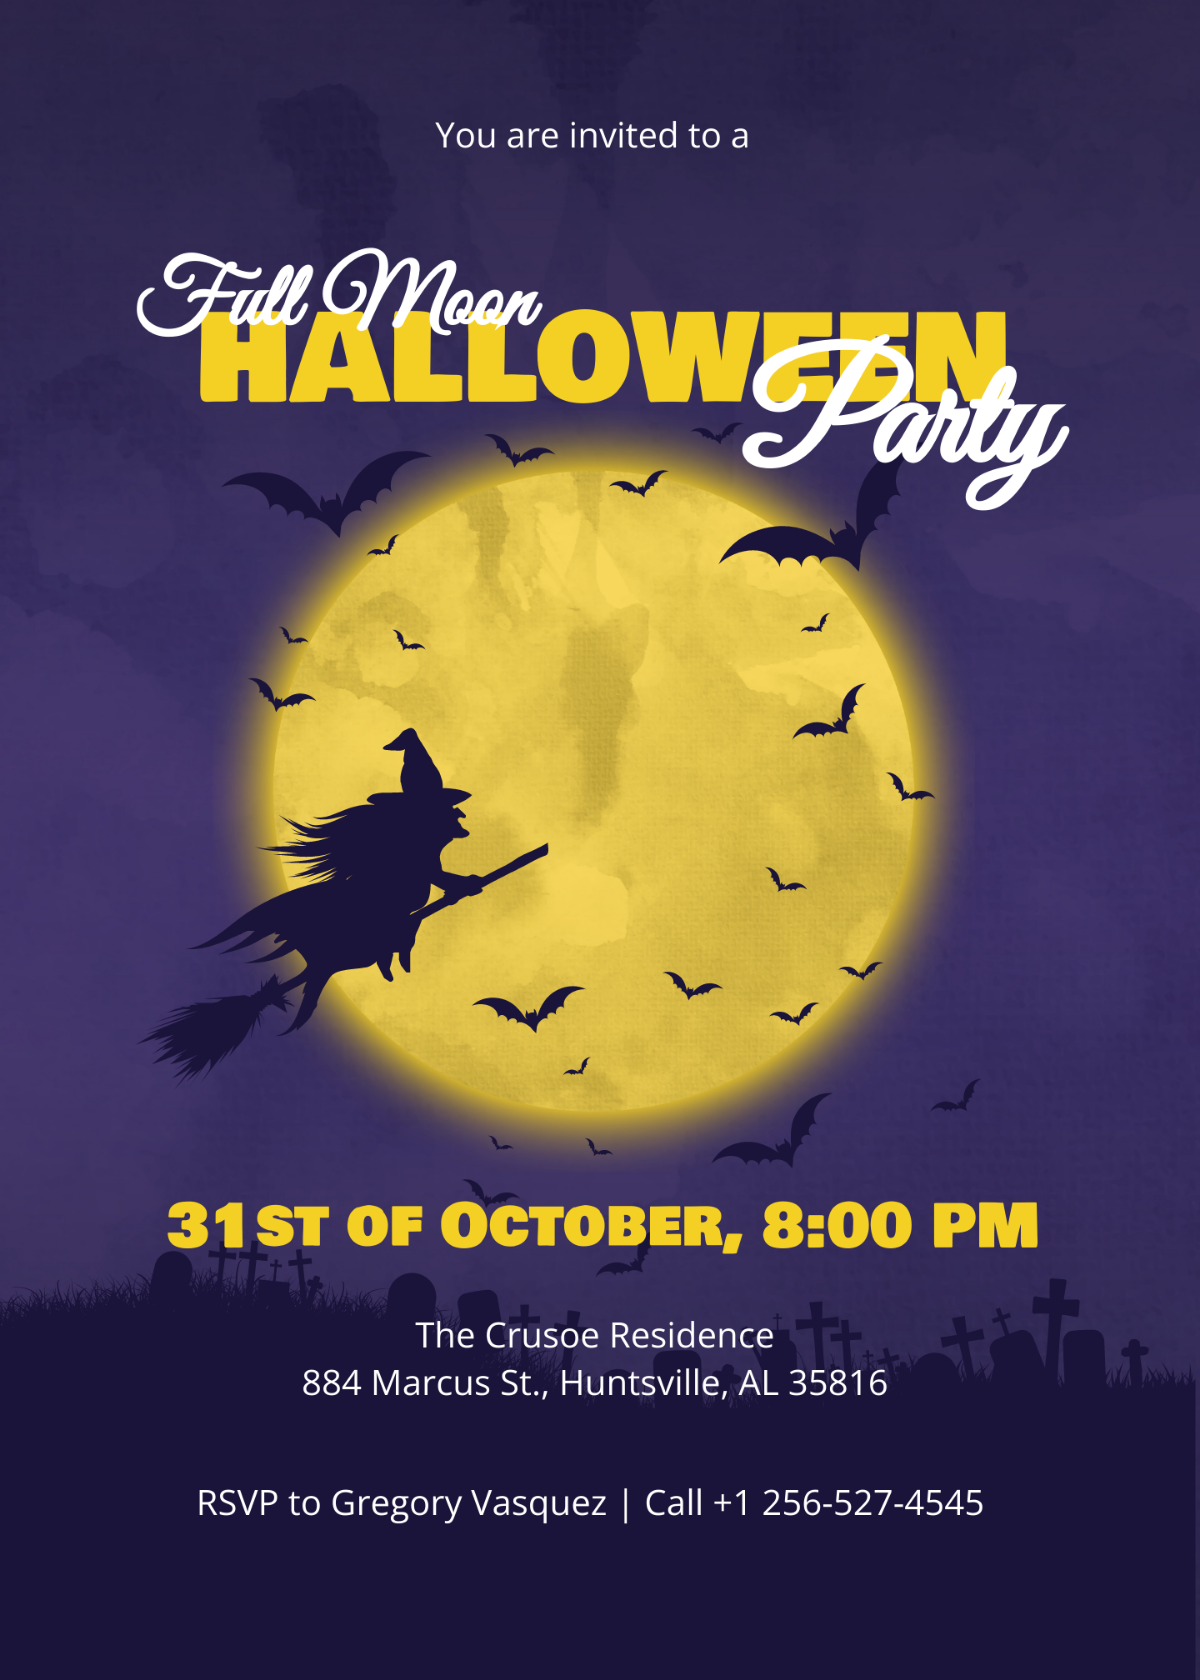 Full Moon Halloween Party Invitation Template